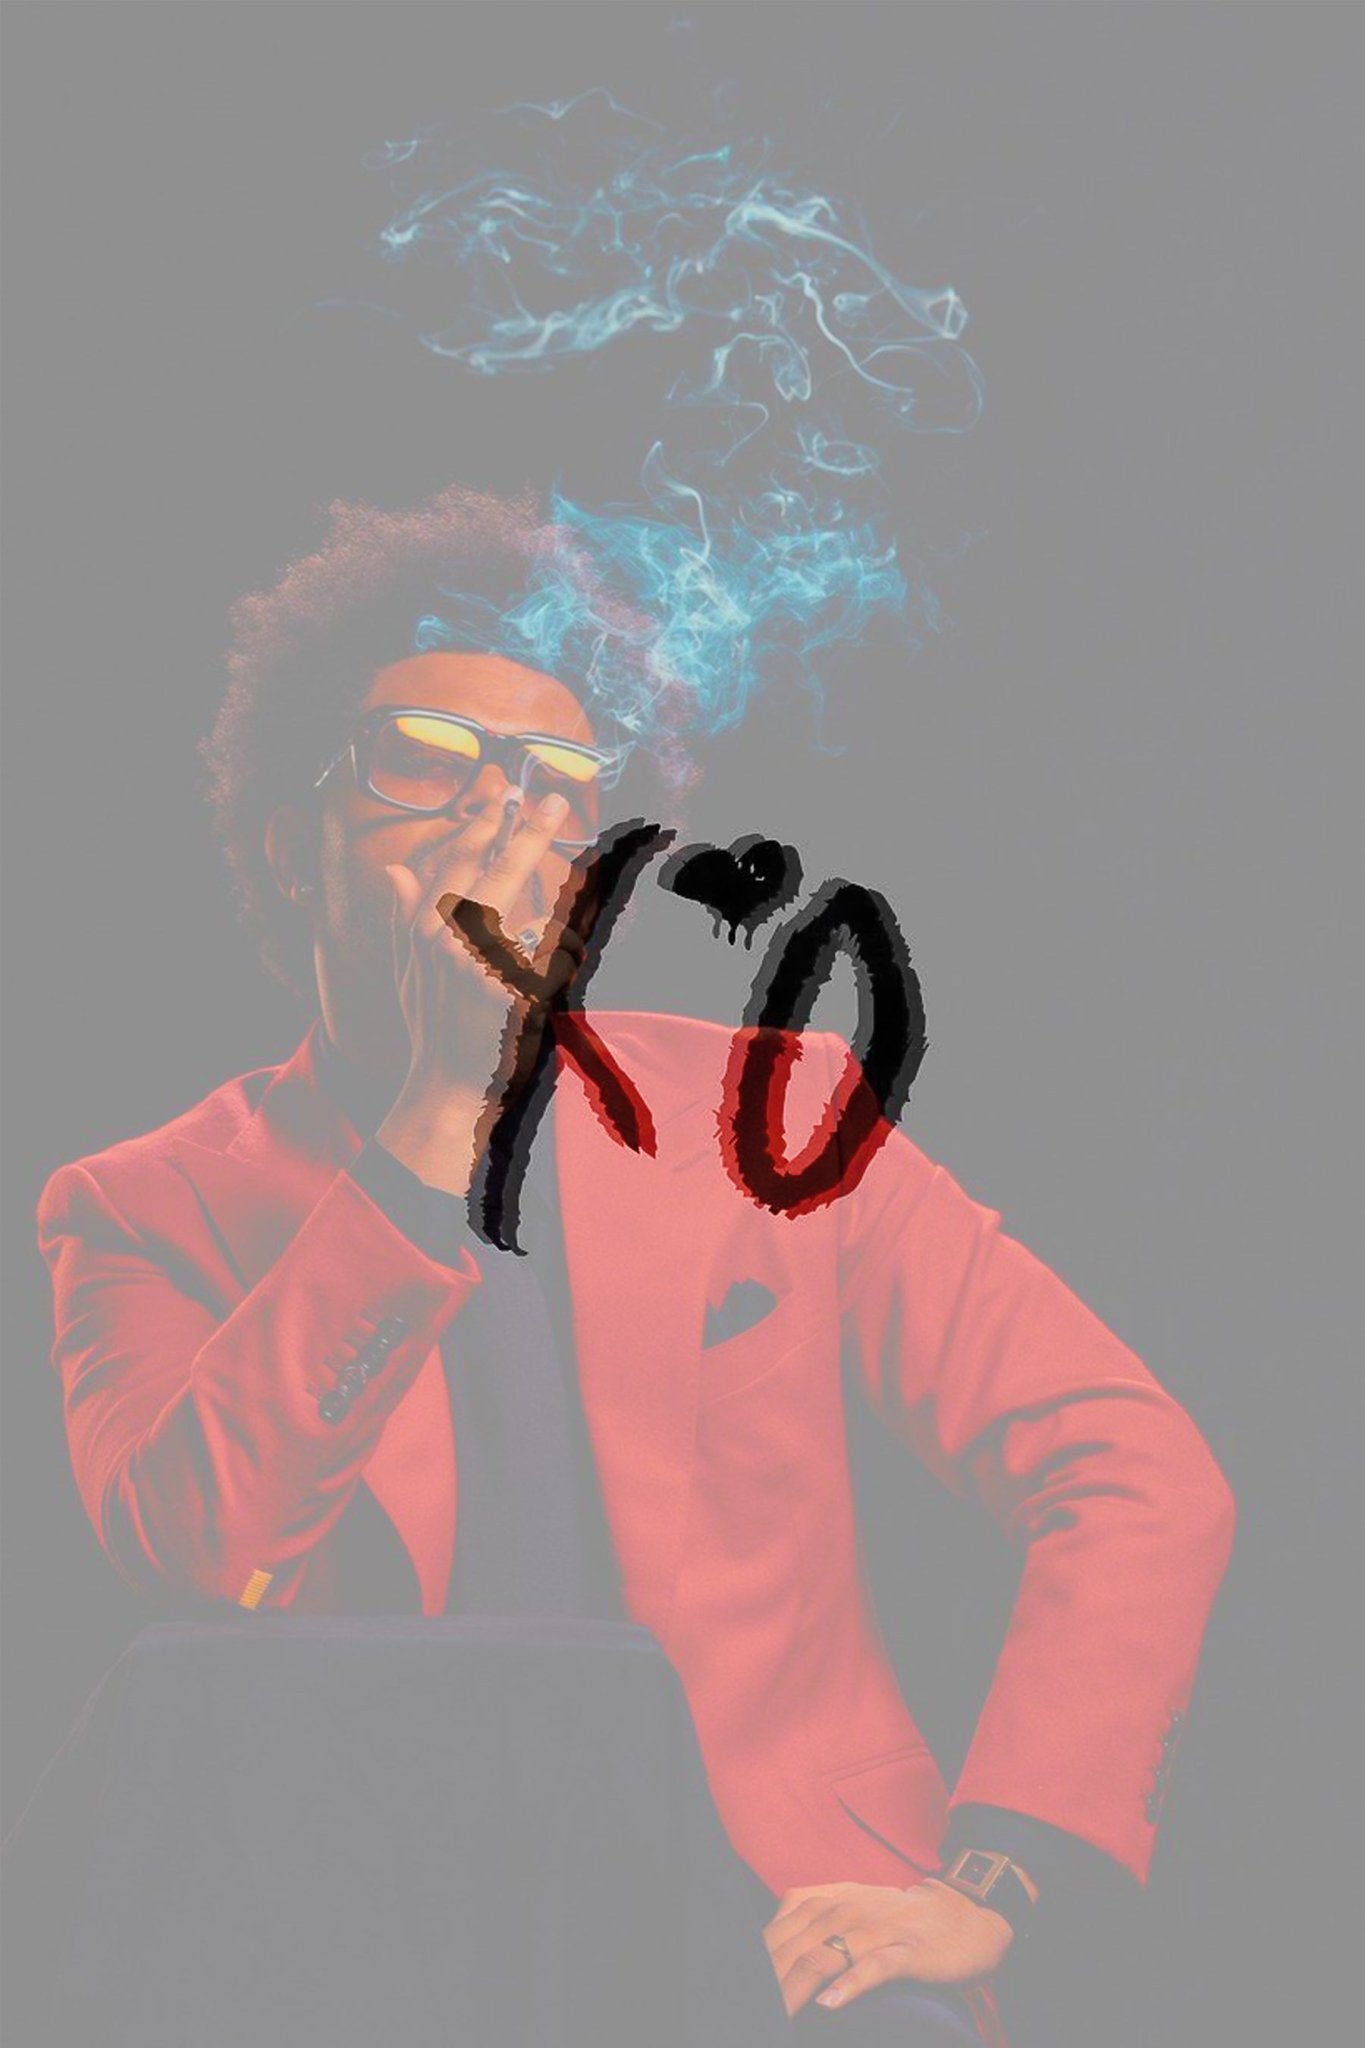 The Weeknd Album Minimalist Polaroid Poster - Teeholly